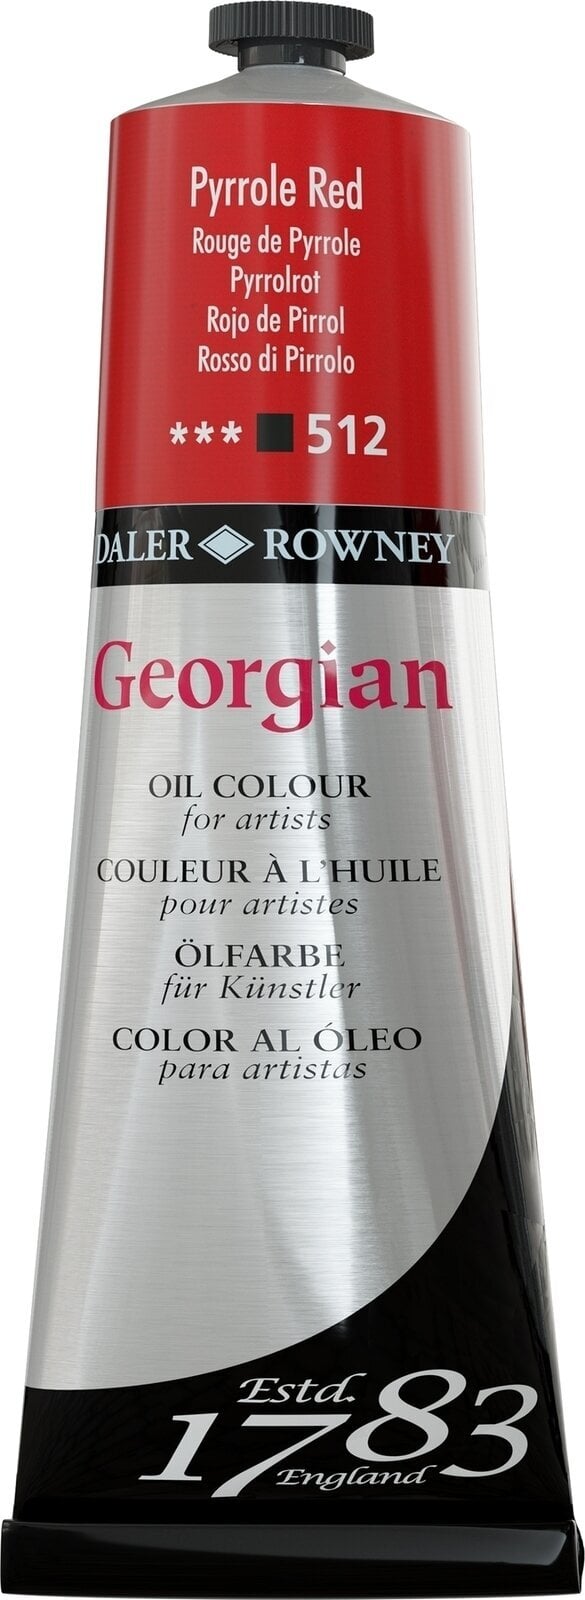 Oil colour Daler Rowney Georgian Oil Paint Pyrrole Red 225 ml 1 pc